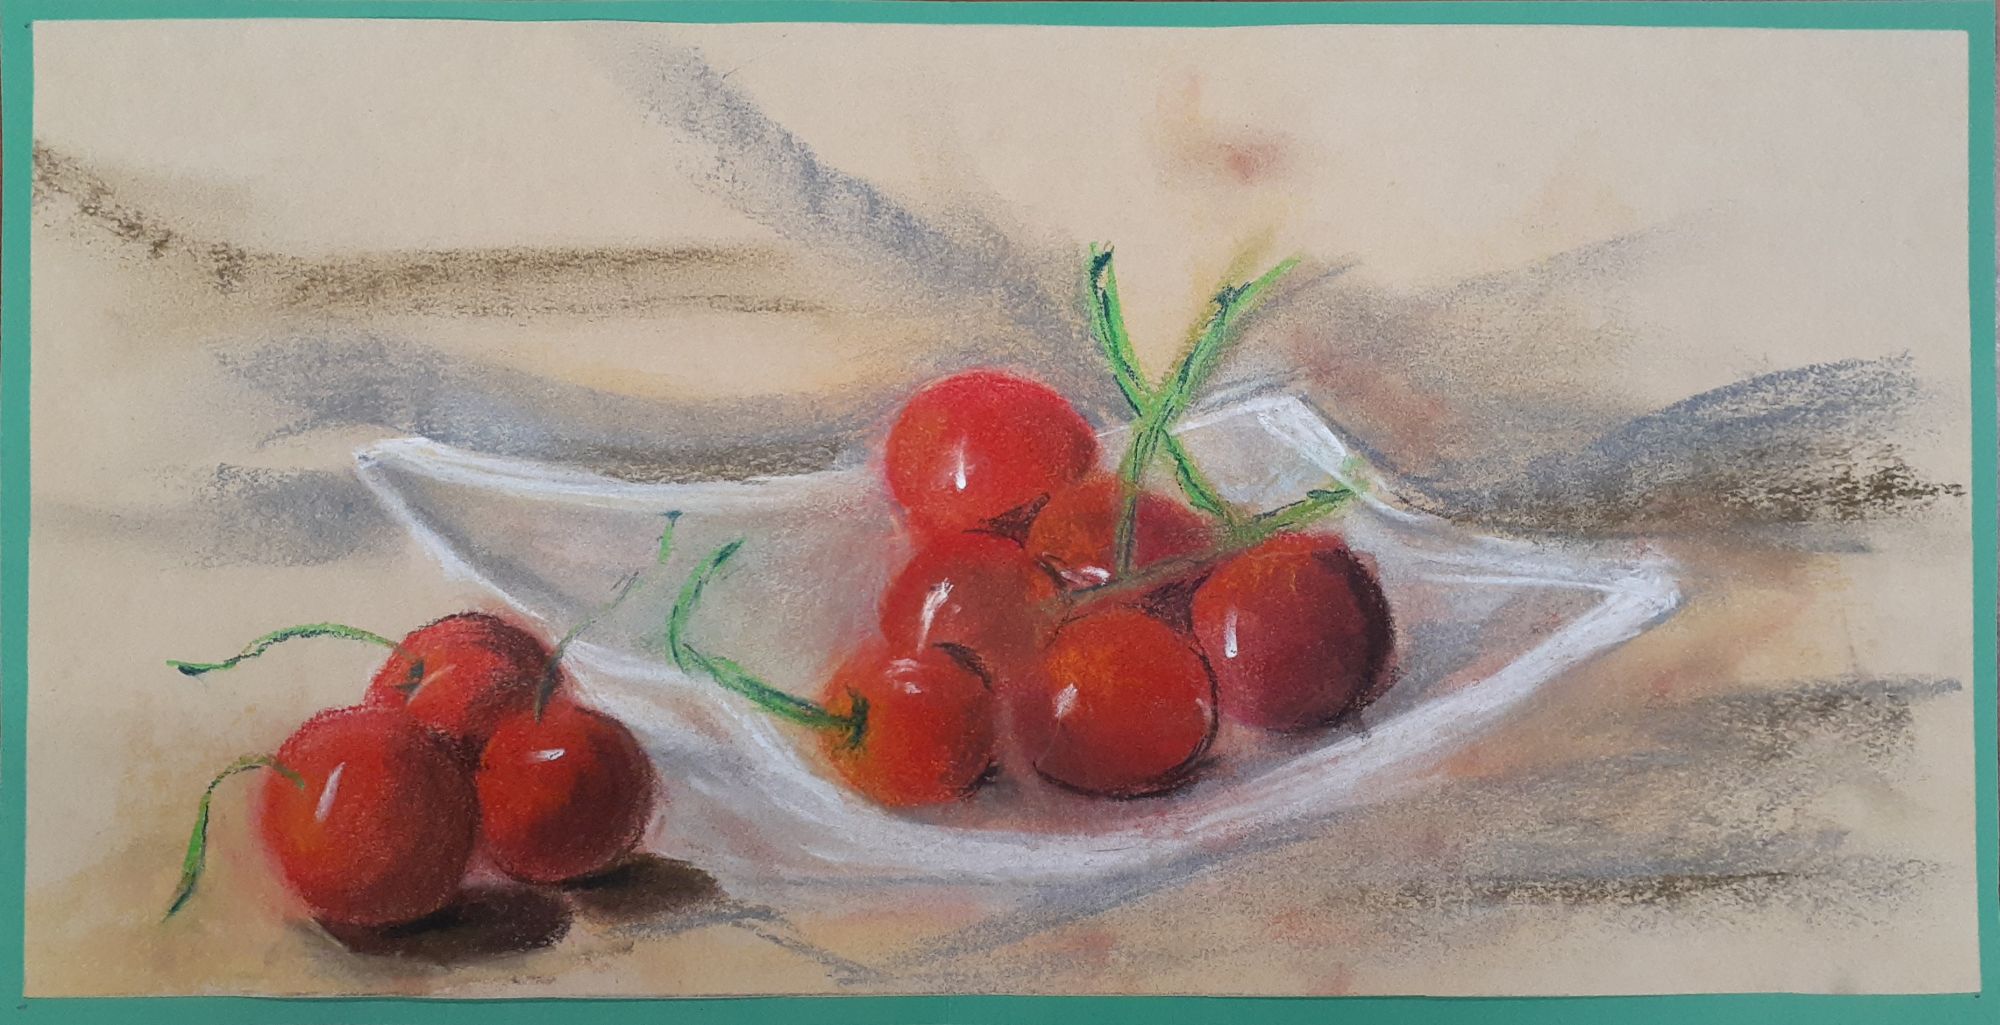 Student artwork - Cherries on top